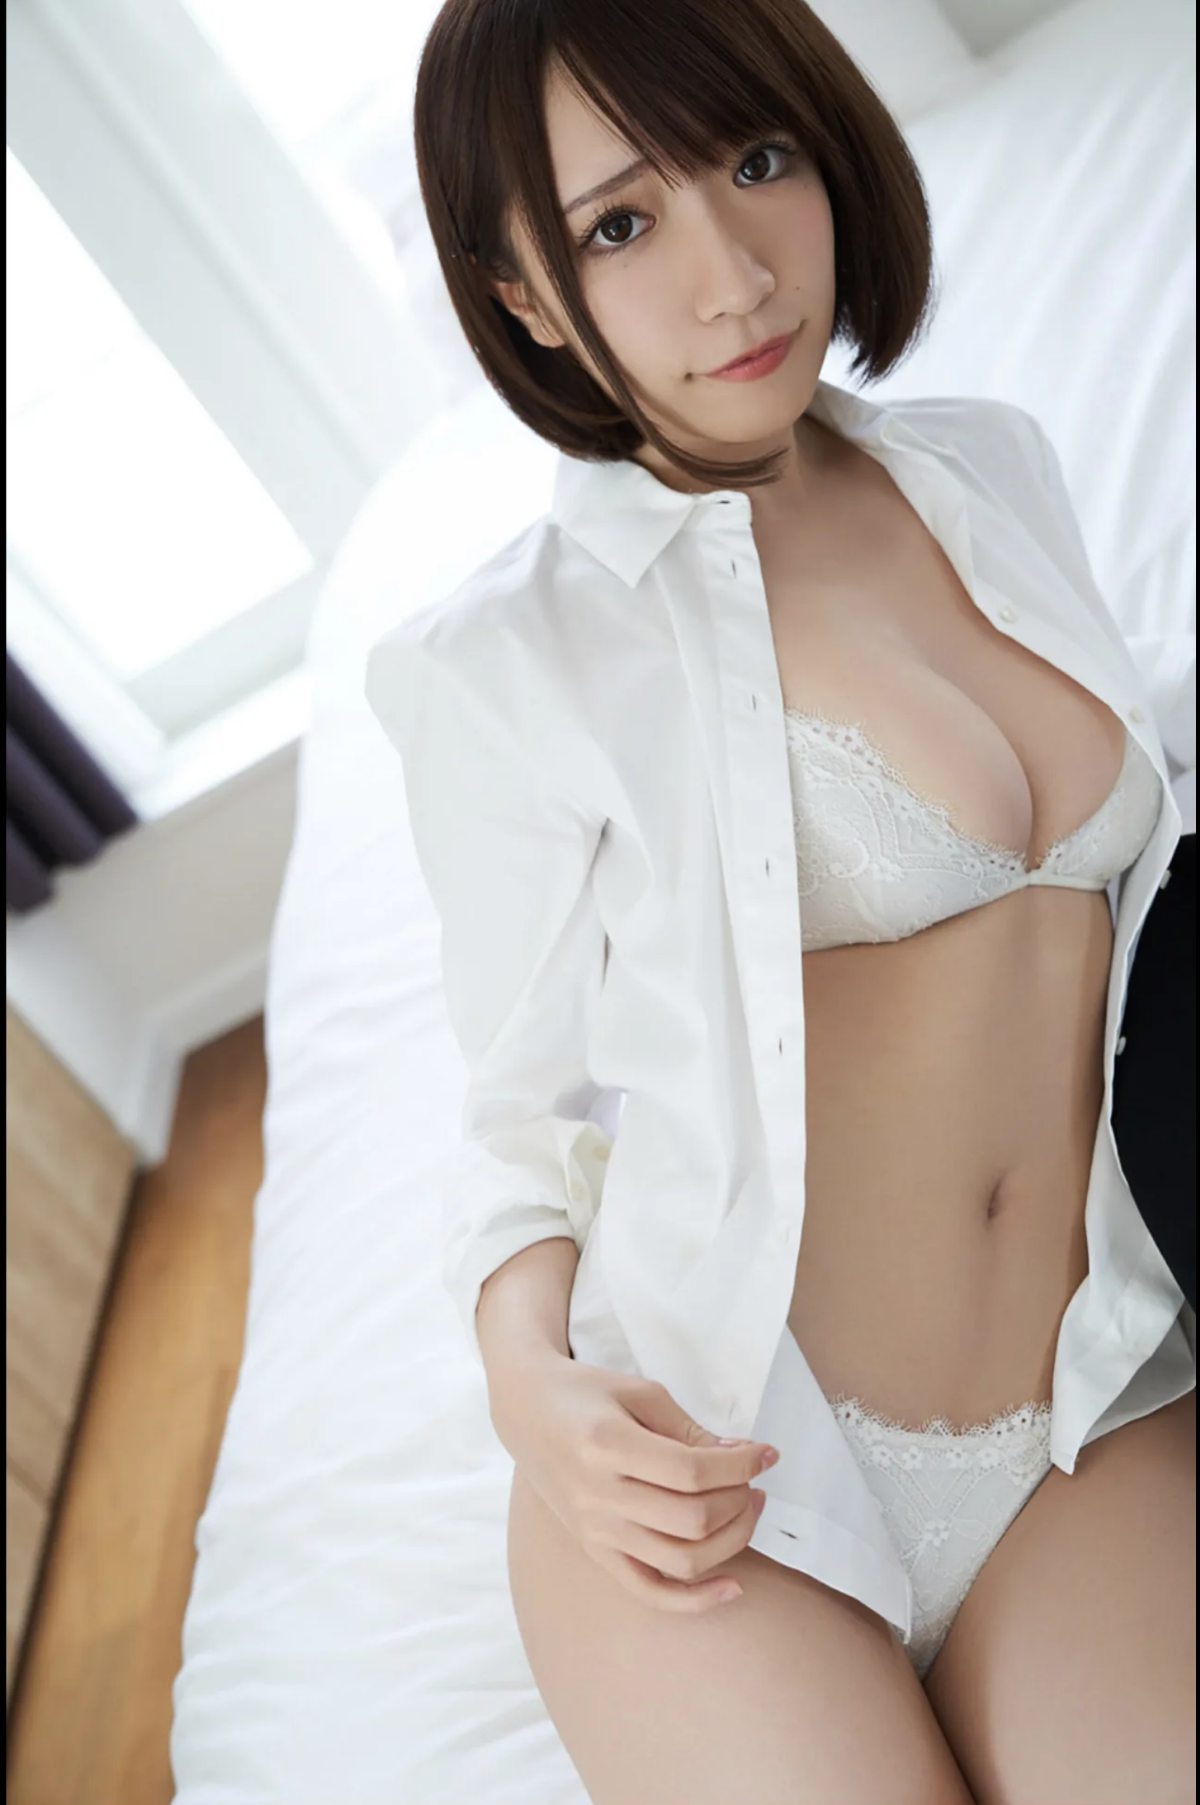 FRIDAY Digital Photobook Airi Shimizu 清水あいり Too erotic body Vol 2 エロすぎるカラダ Vol 2 2021 04 30 0014 0388857773.jpg